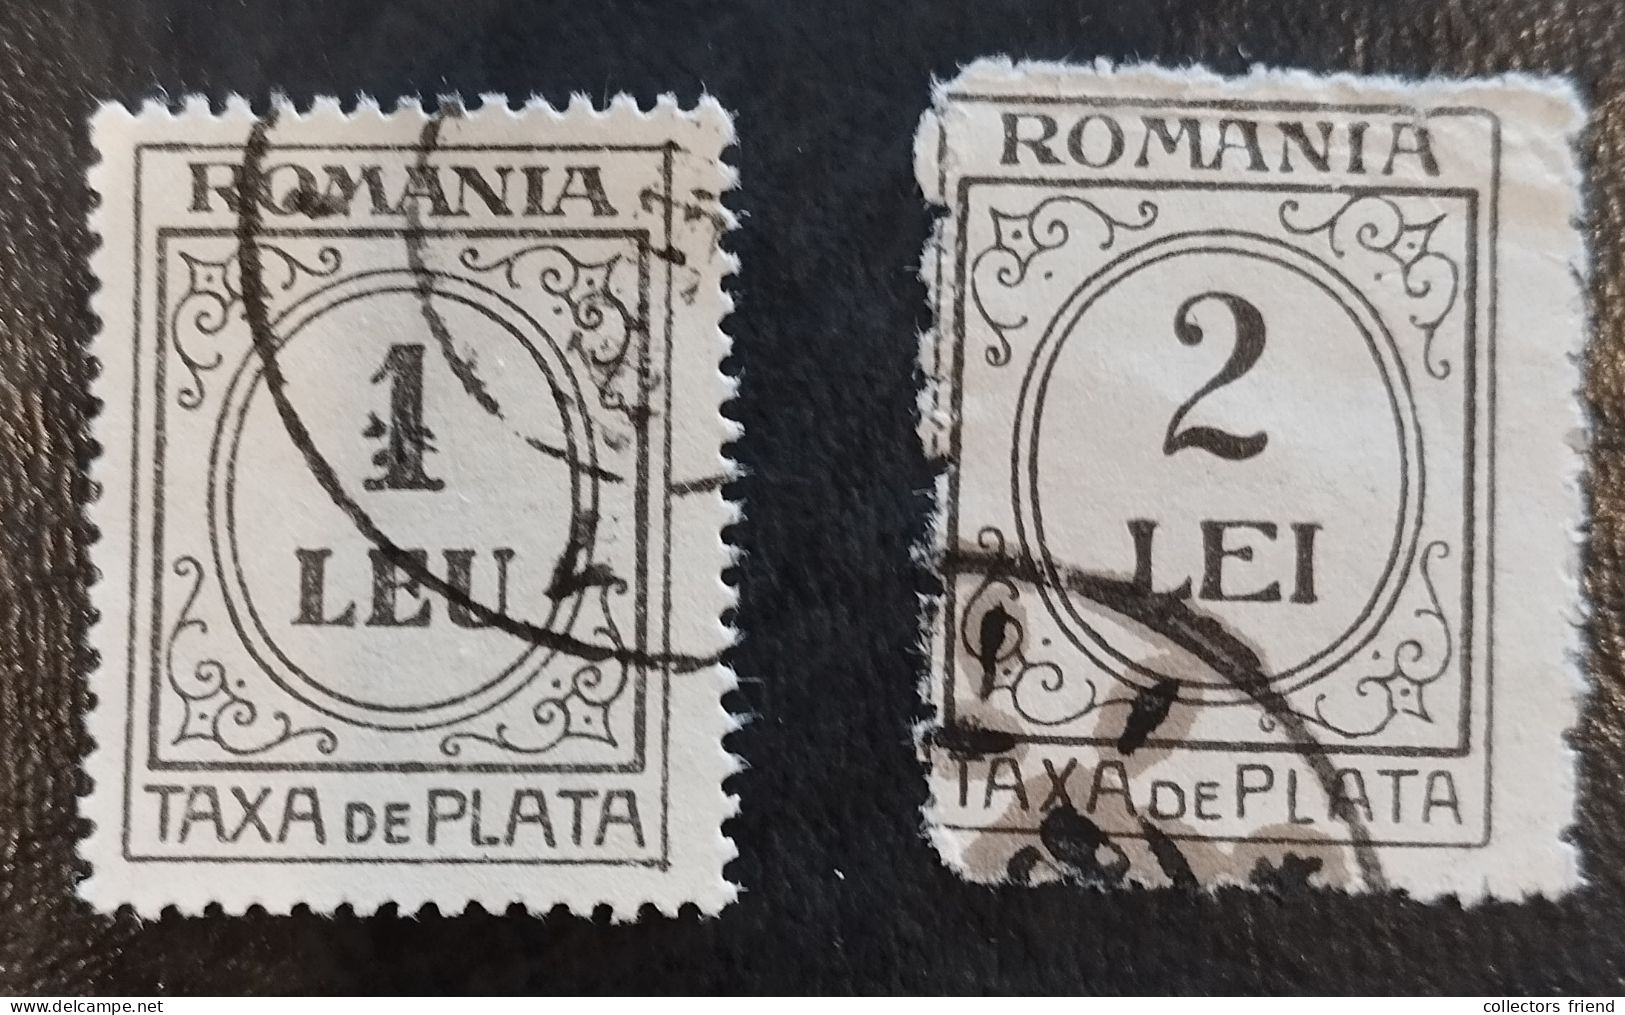 Romania Romana Rumänien - Taxa De Plata - 1 LEU +  2 LEI - Used - Used Stamps